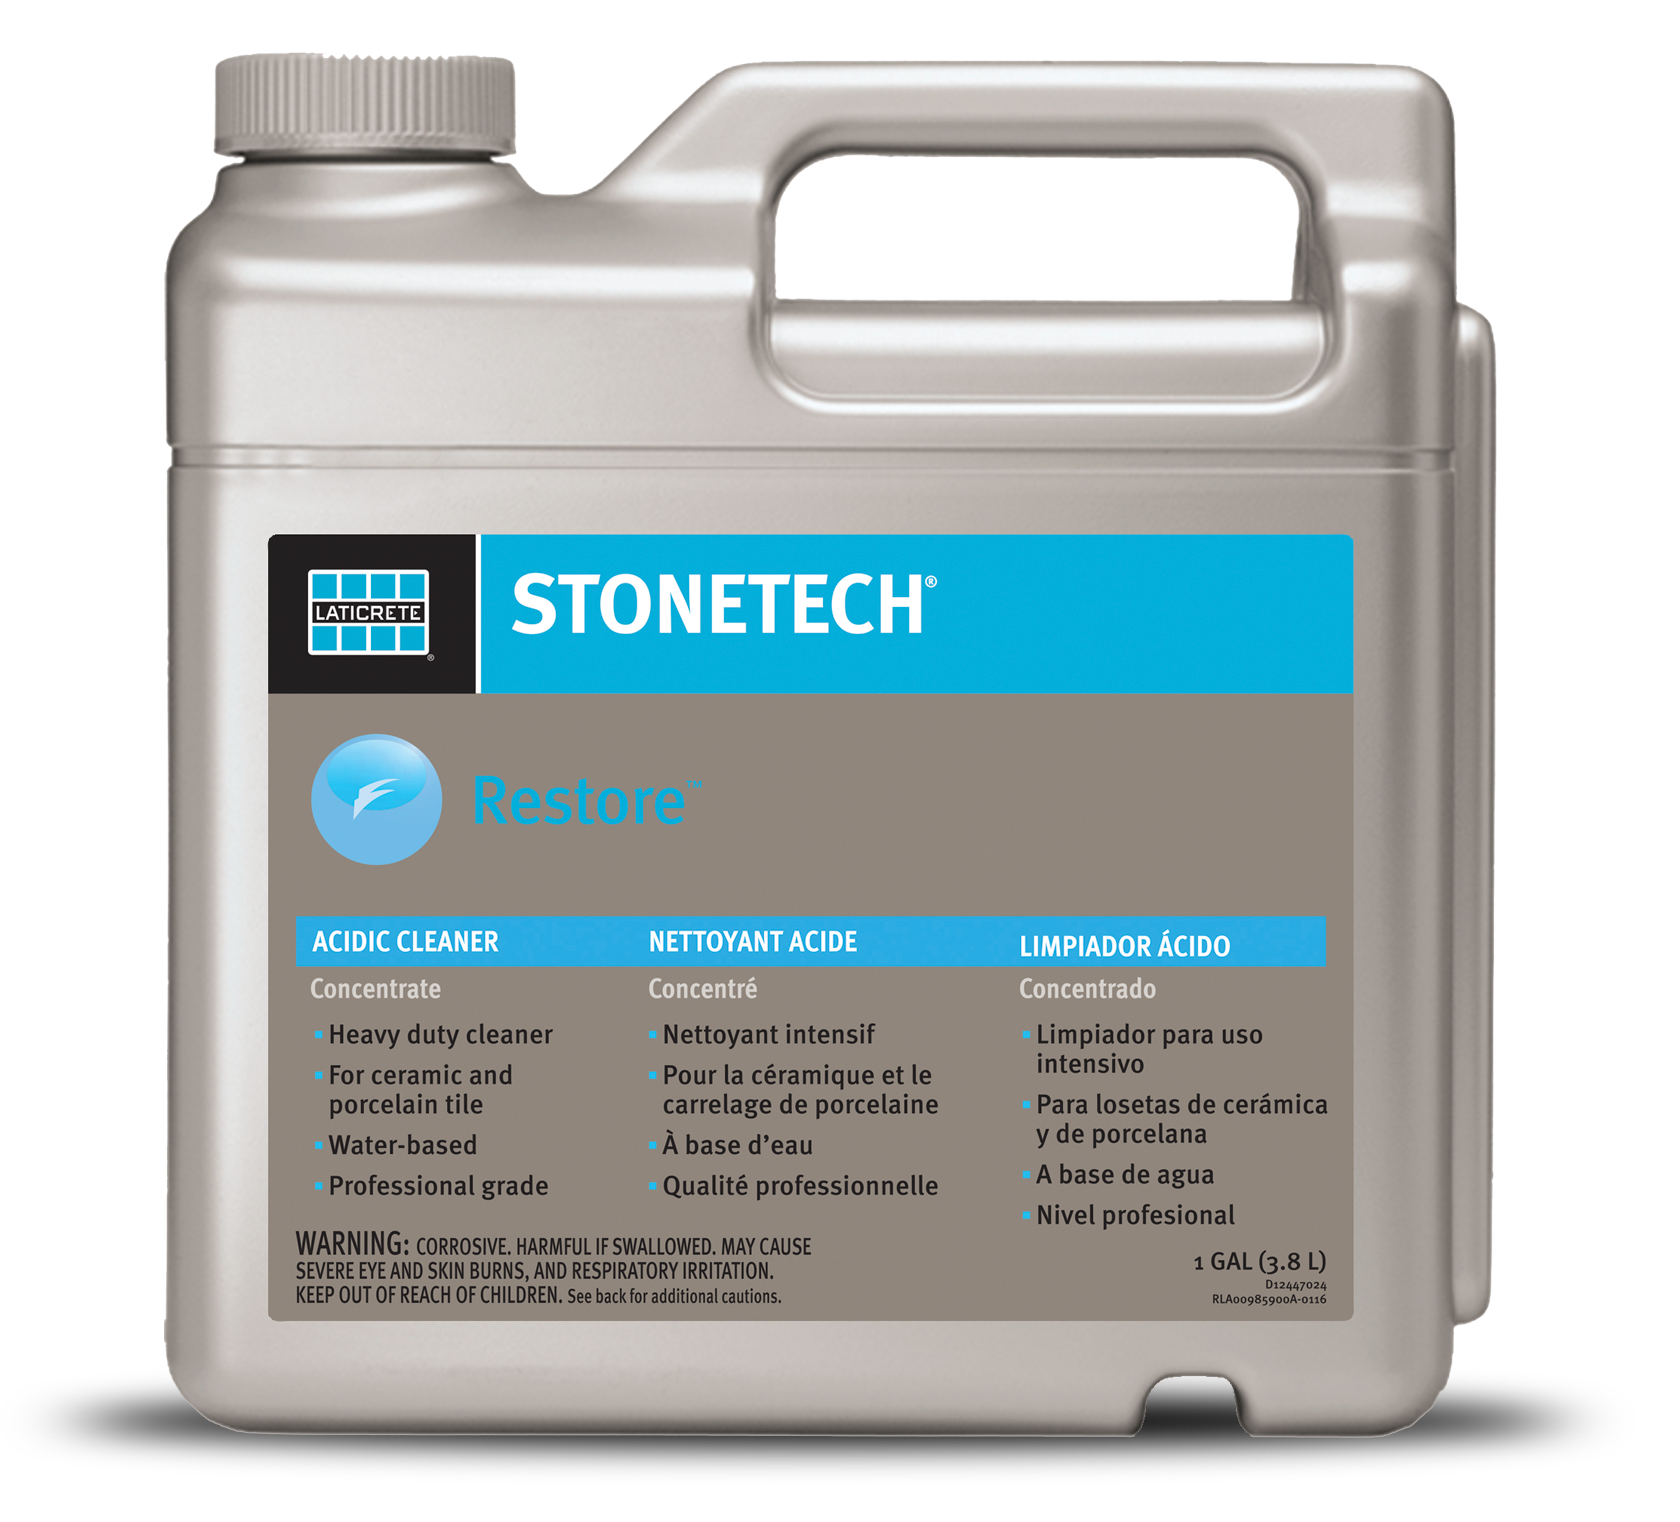 STONETECH® Restore™ Acidic Cleaner